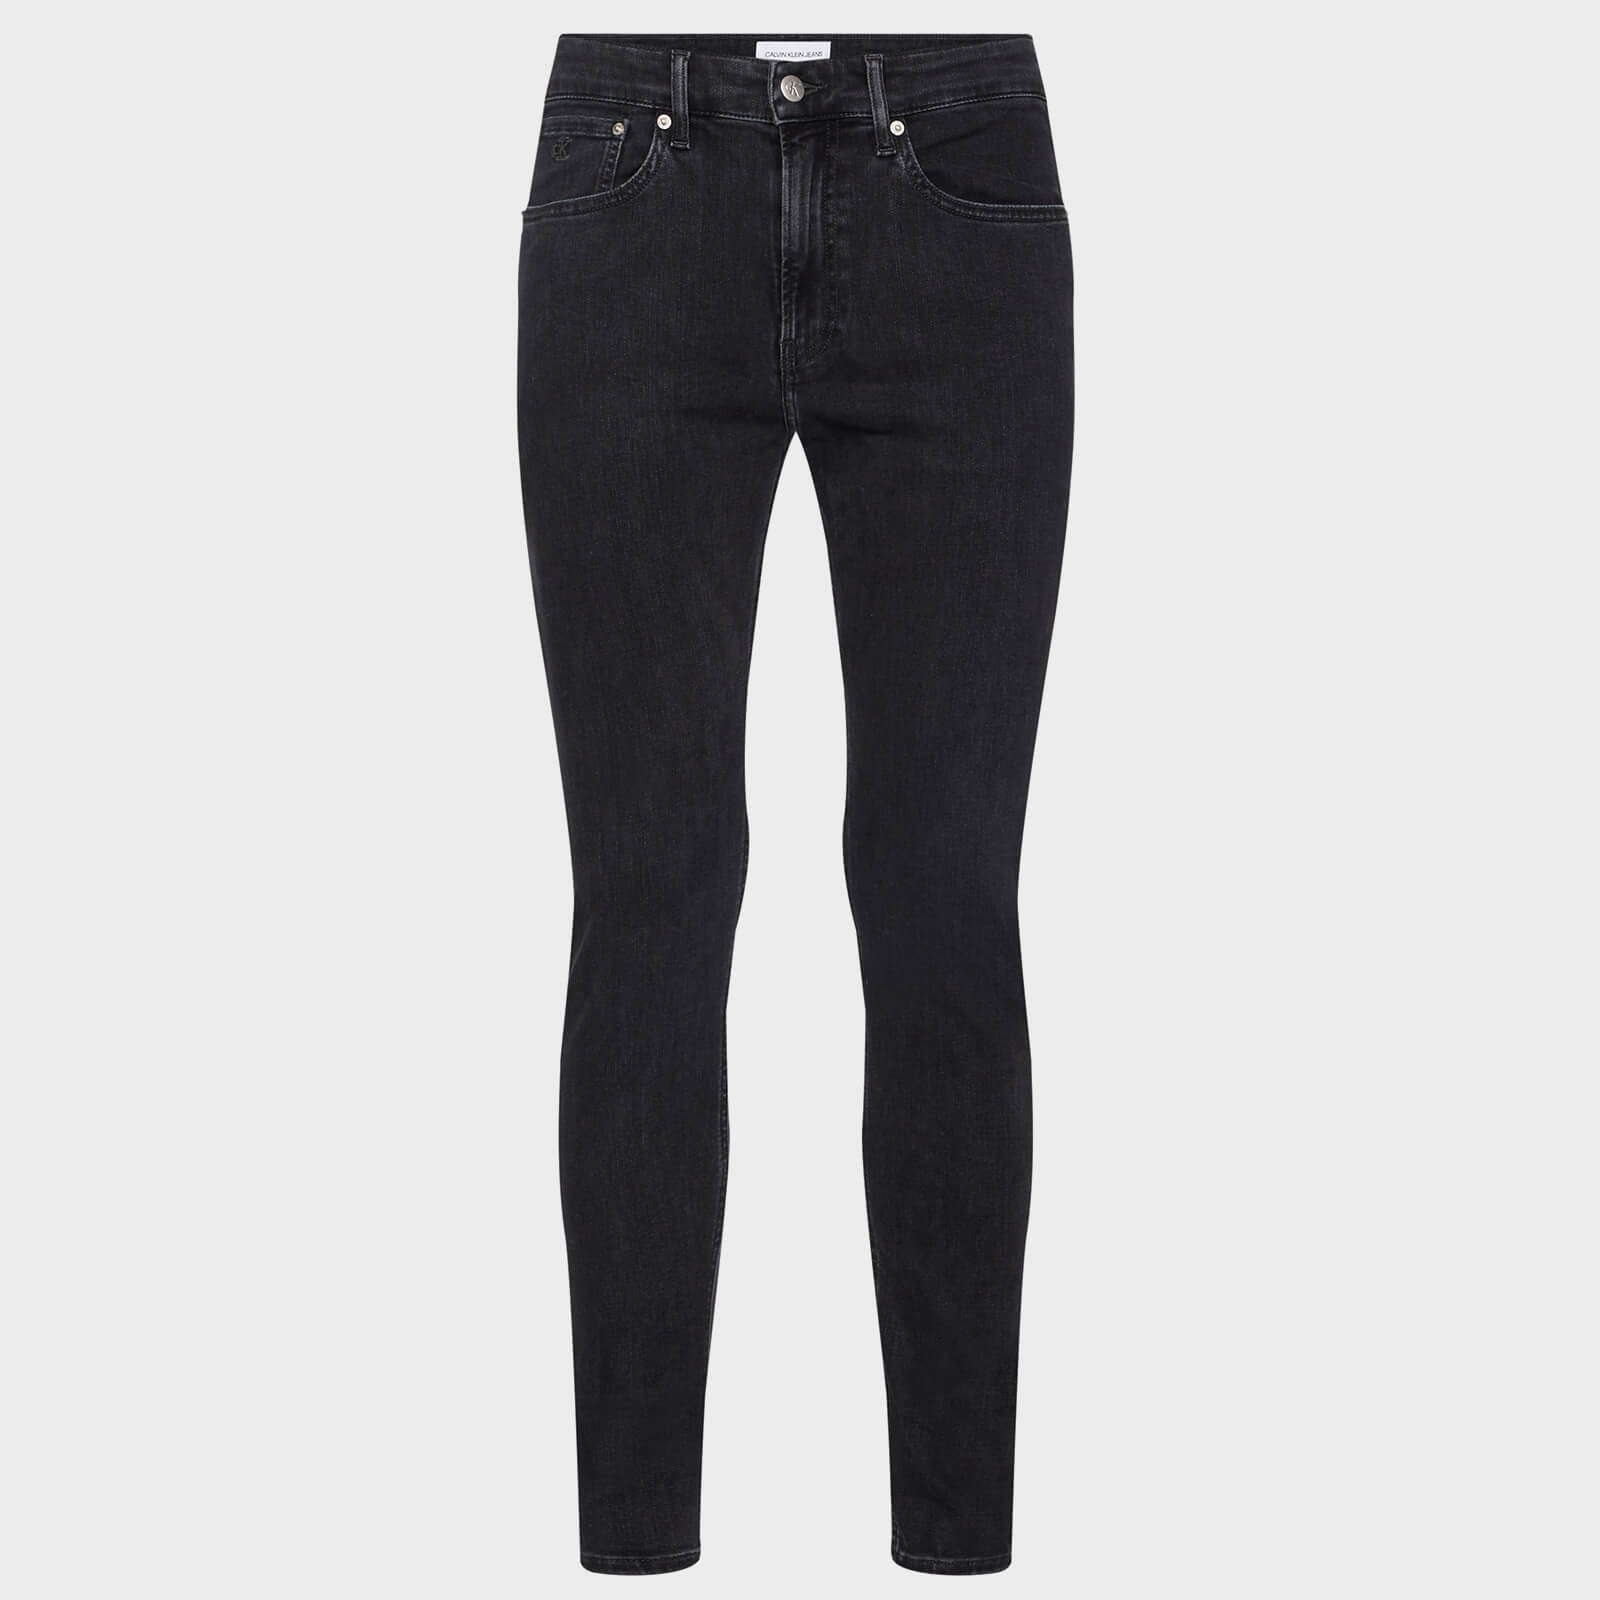 CK Jeans Men's Skinny Jeans - Grey - W30/L32